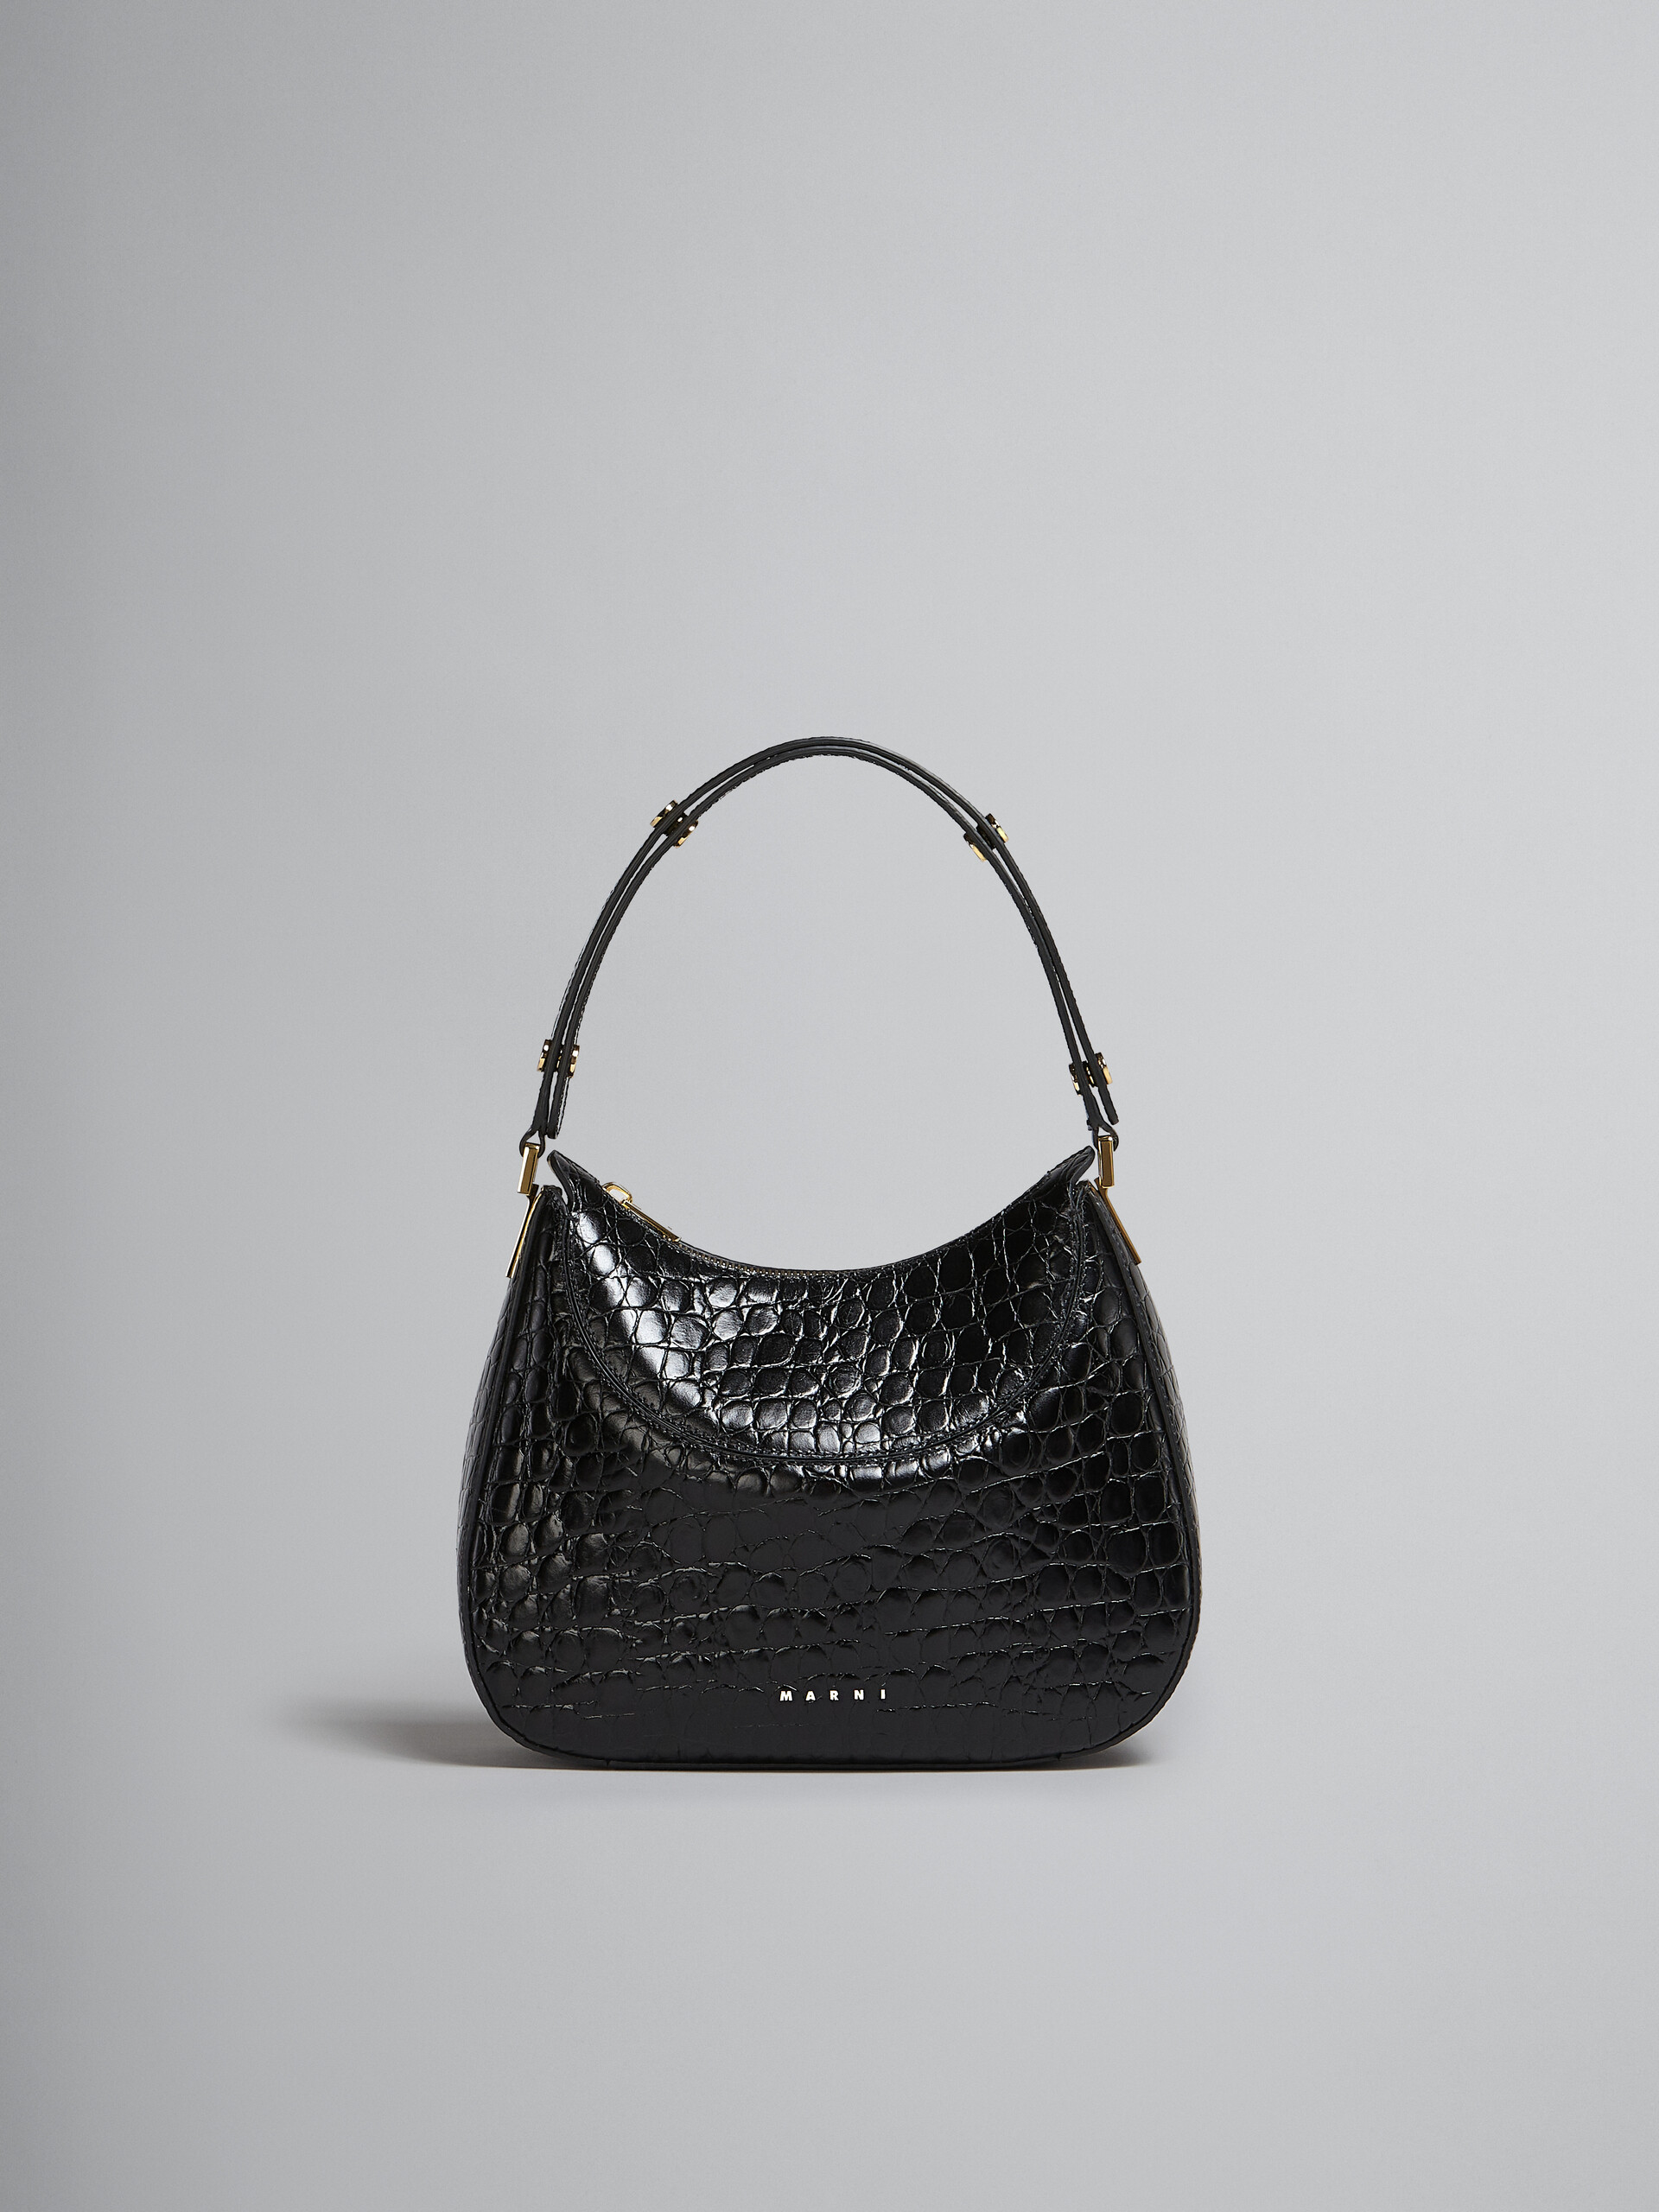 Milano Small Bag in black croco print leather - Handbag - Image 1